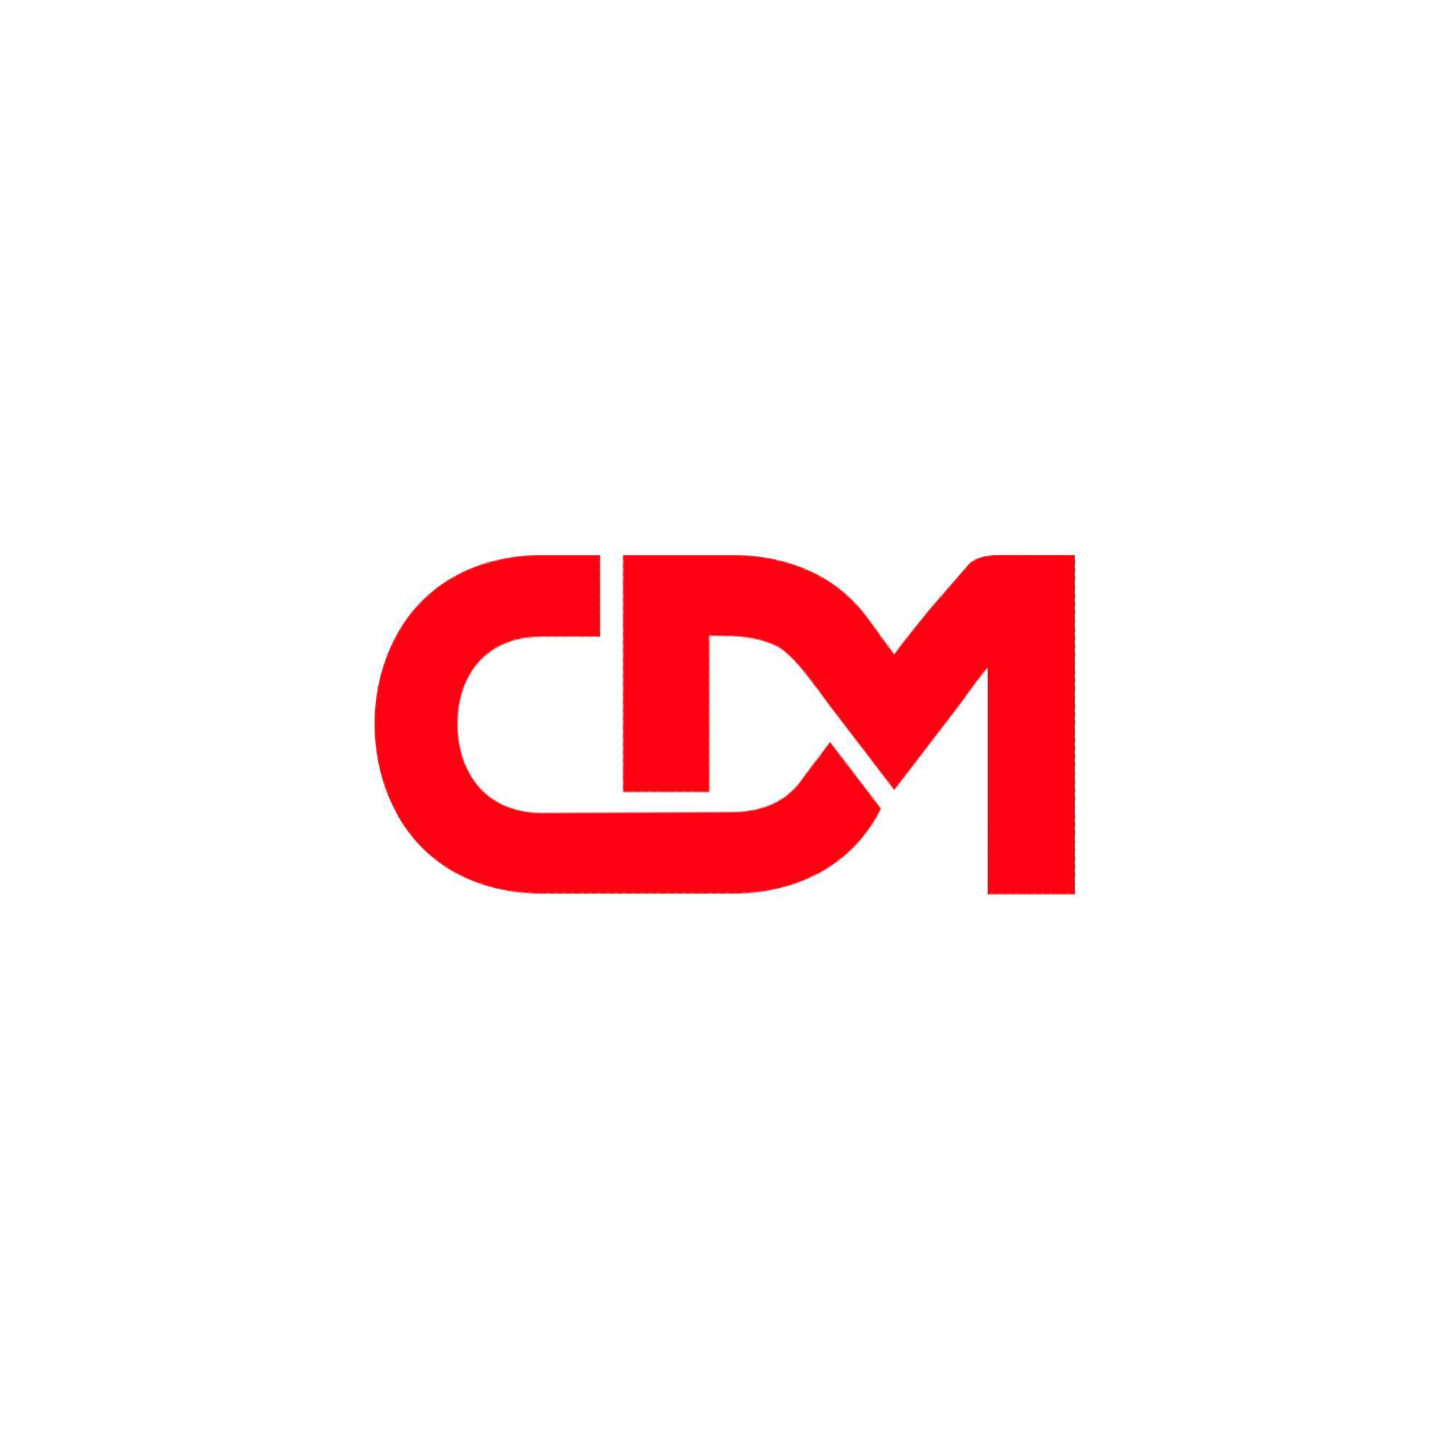 CDM Staff